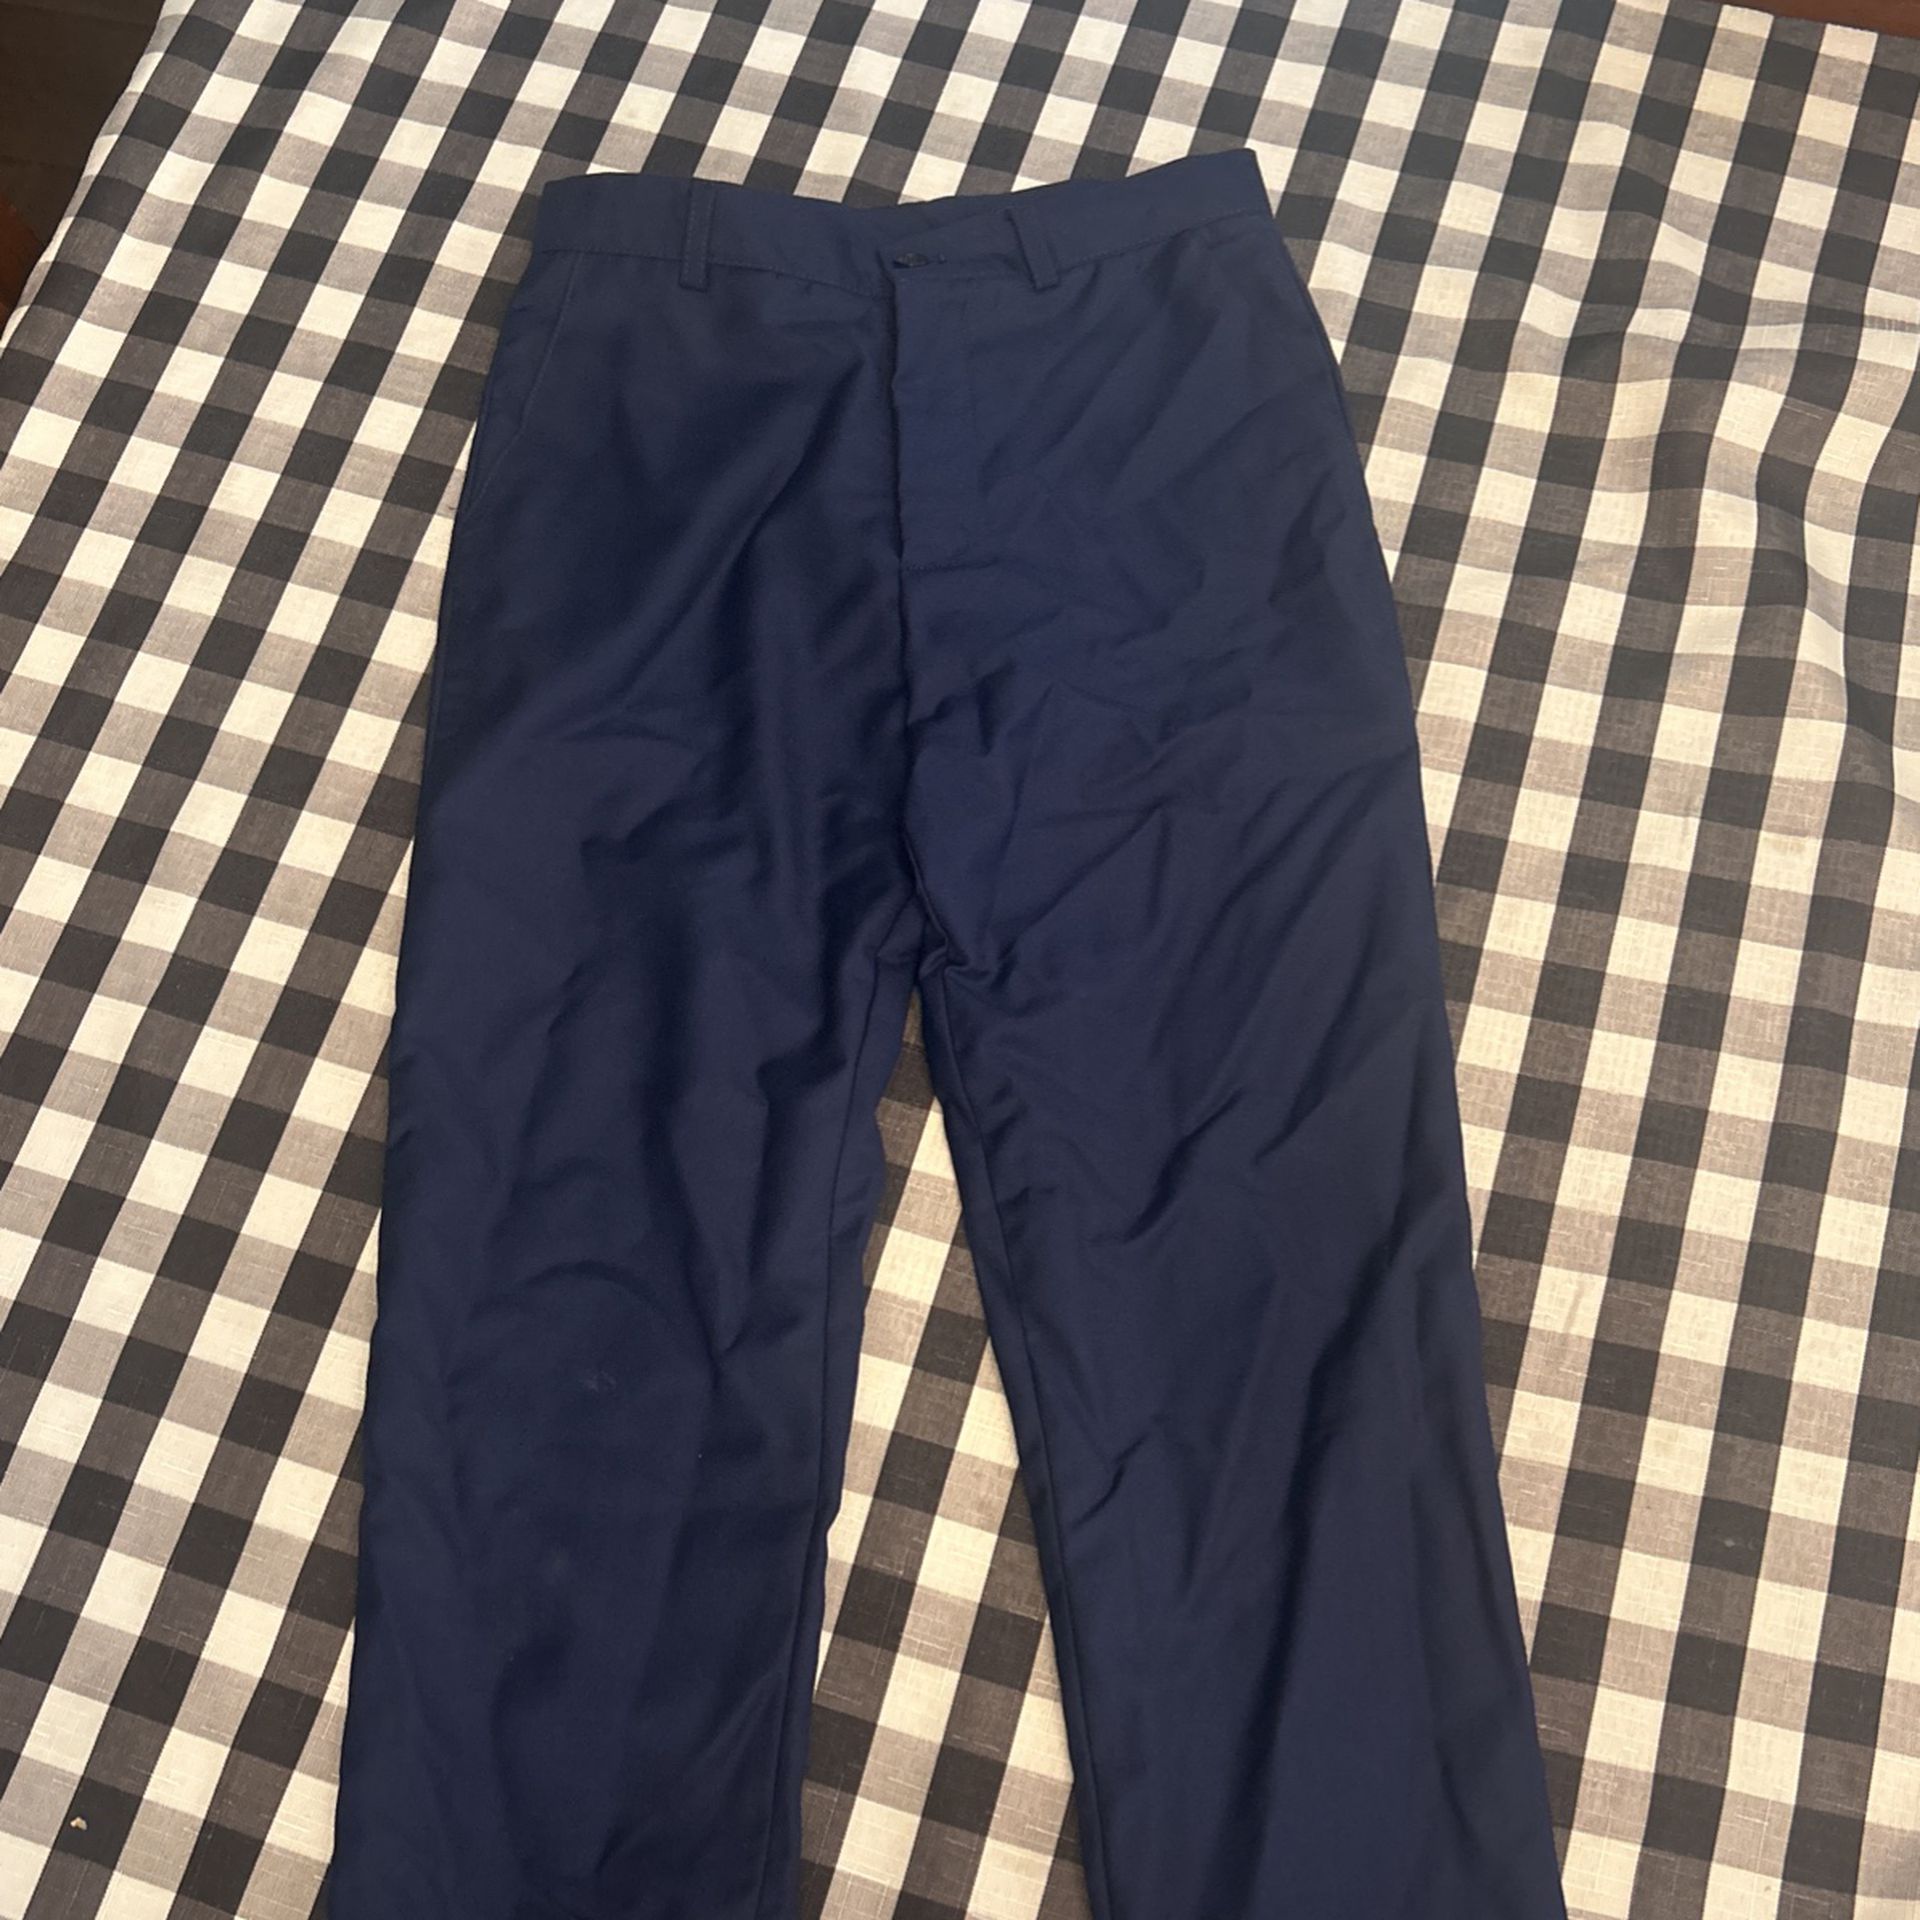 Boys Size 10 Navy Blue Dress Pants 